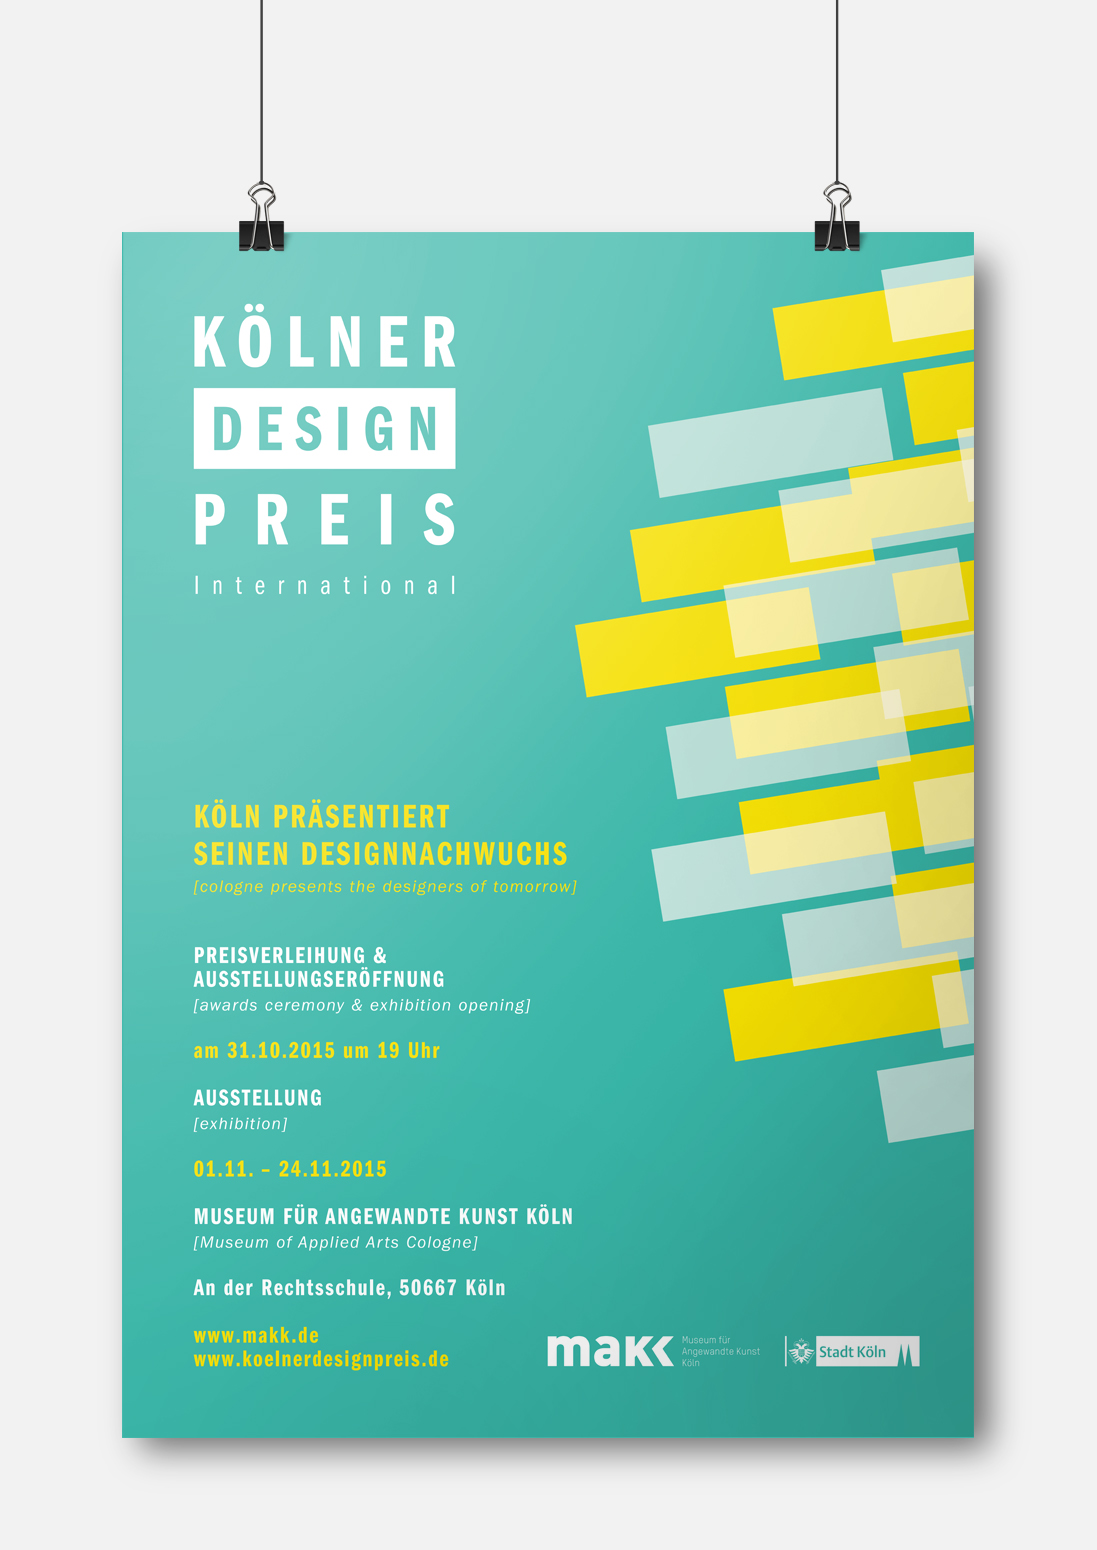 Kölner Design Preis – Poster